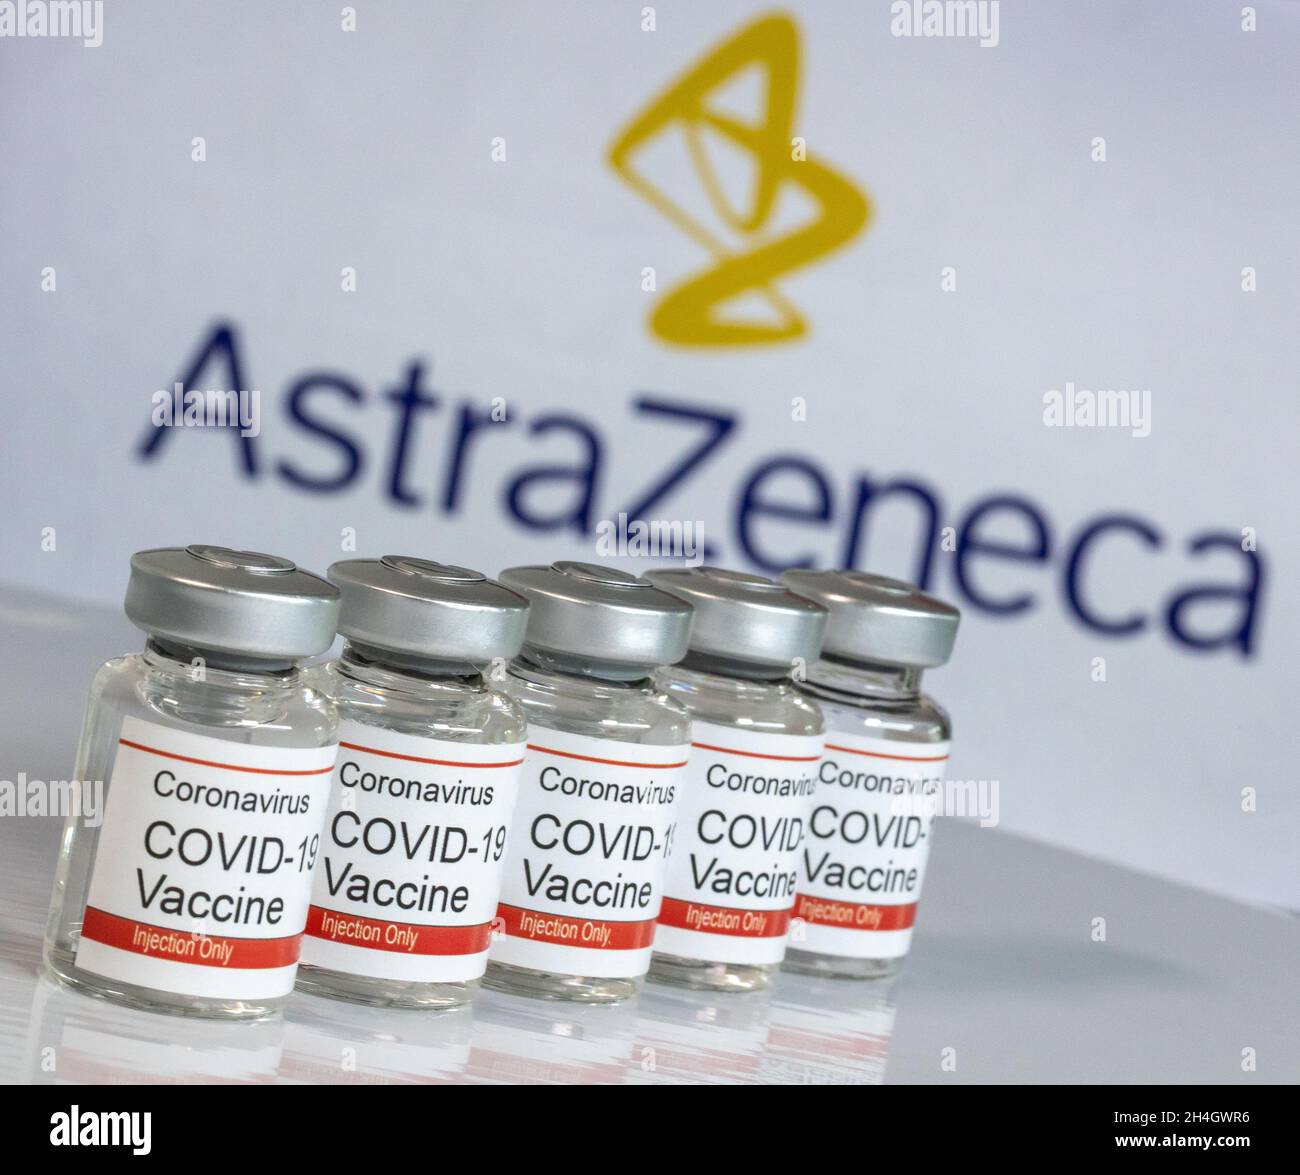 Vial of Coronavirus vaccine with Astrazeneca logo in the background Stock Photo